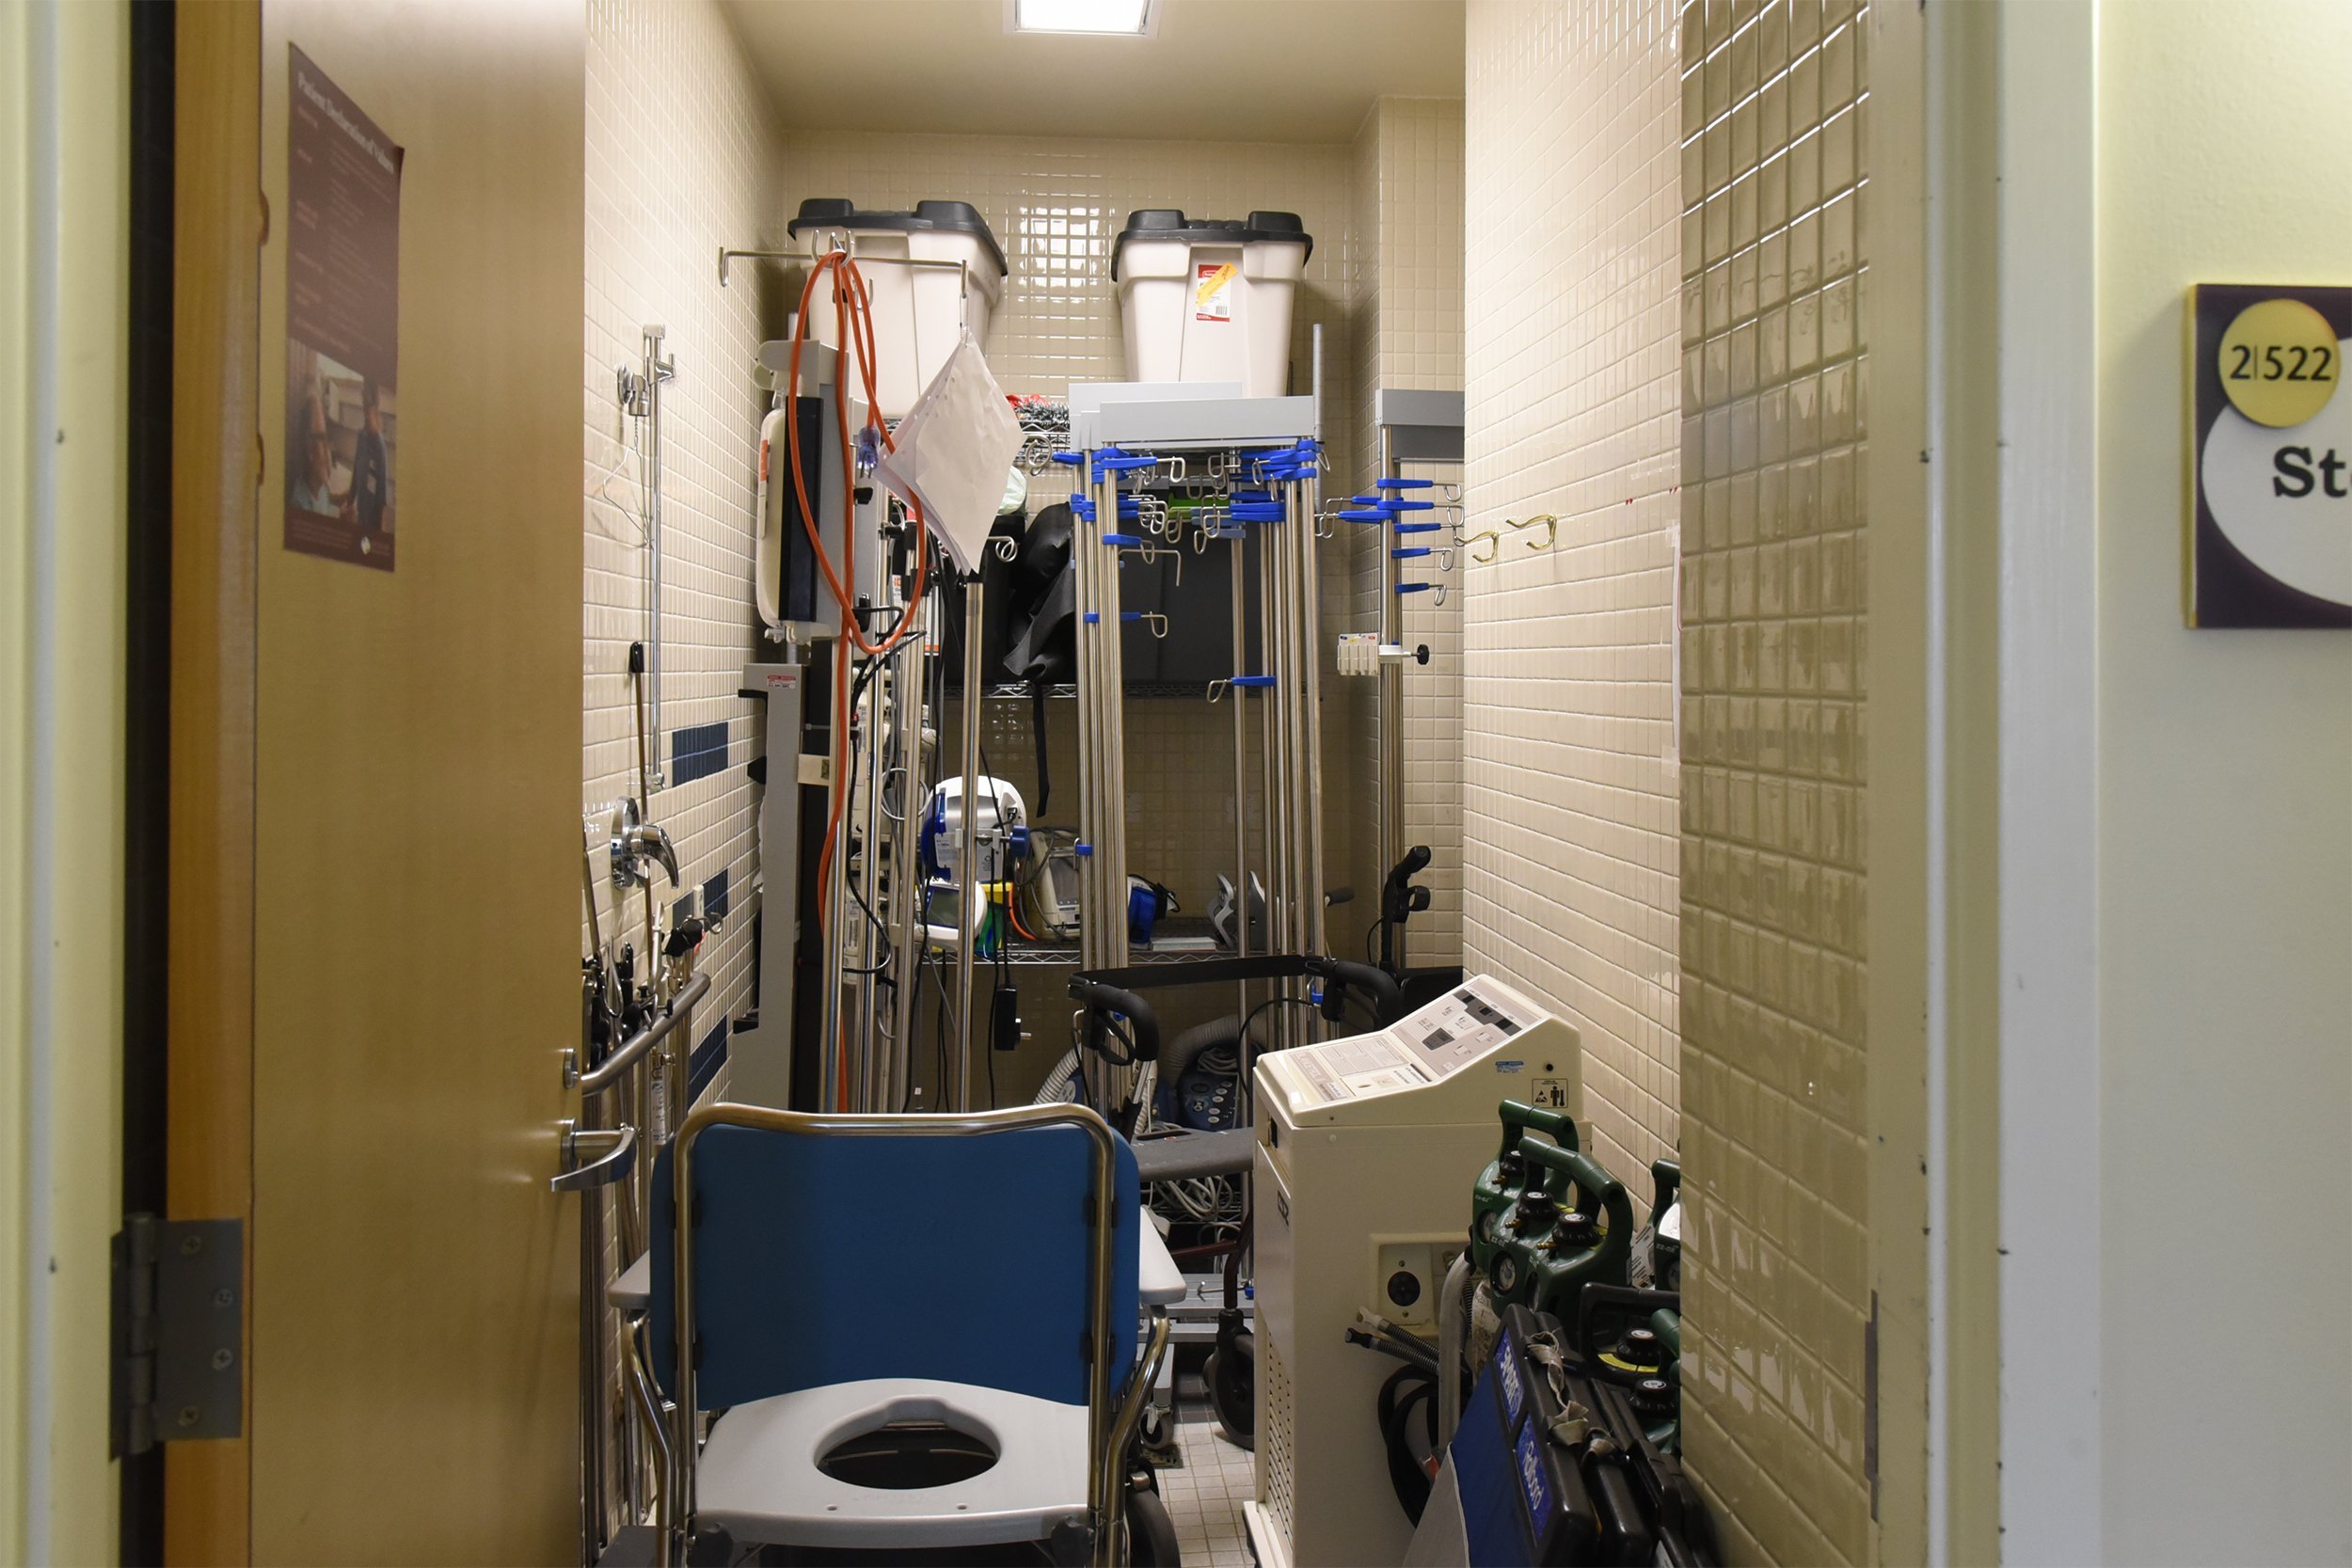 A hospital storage closet full of equipment